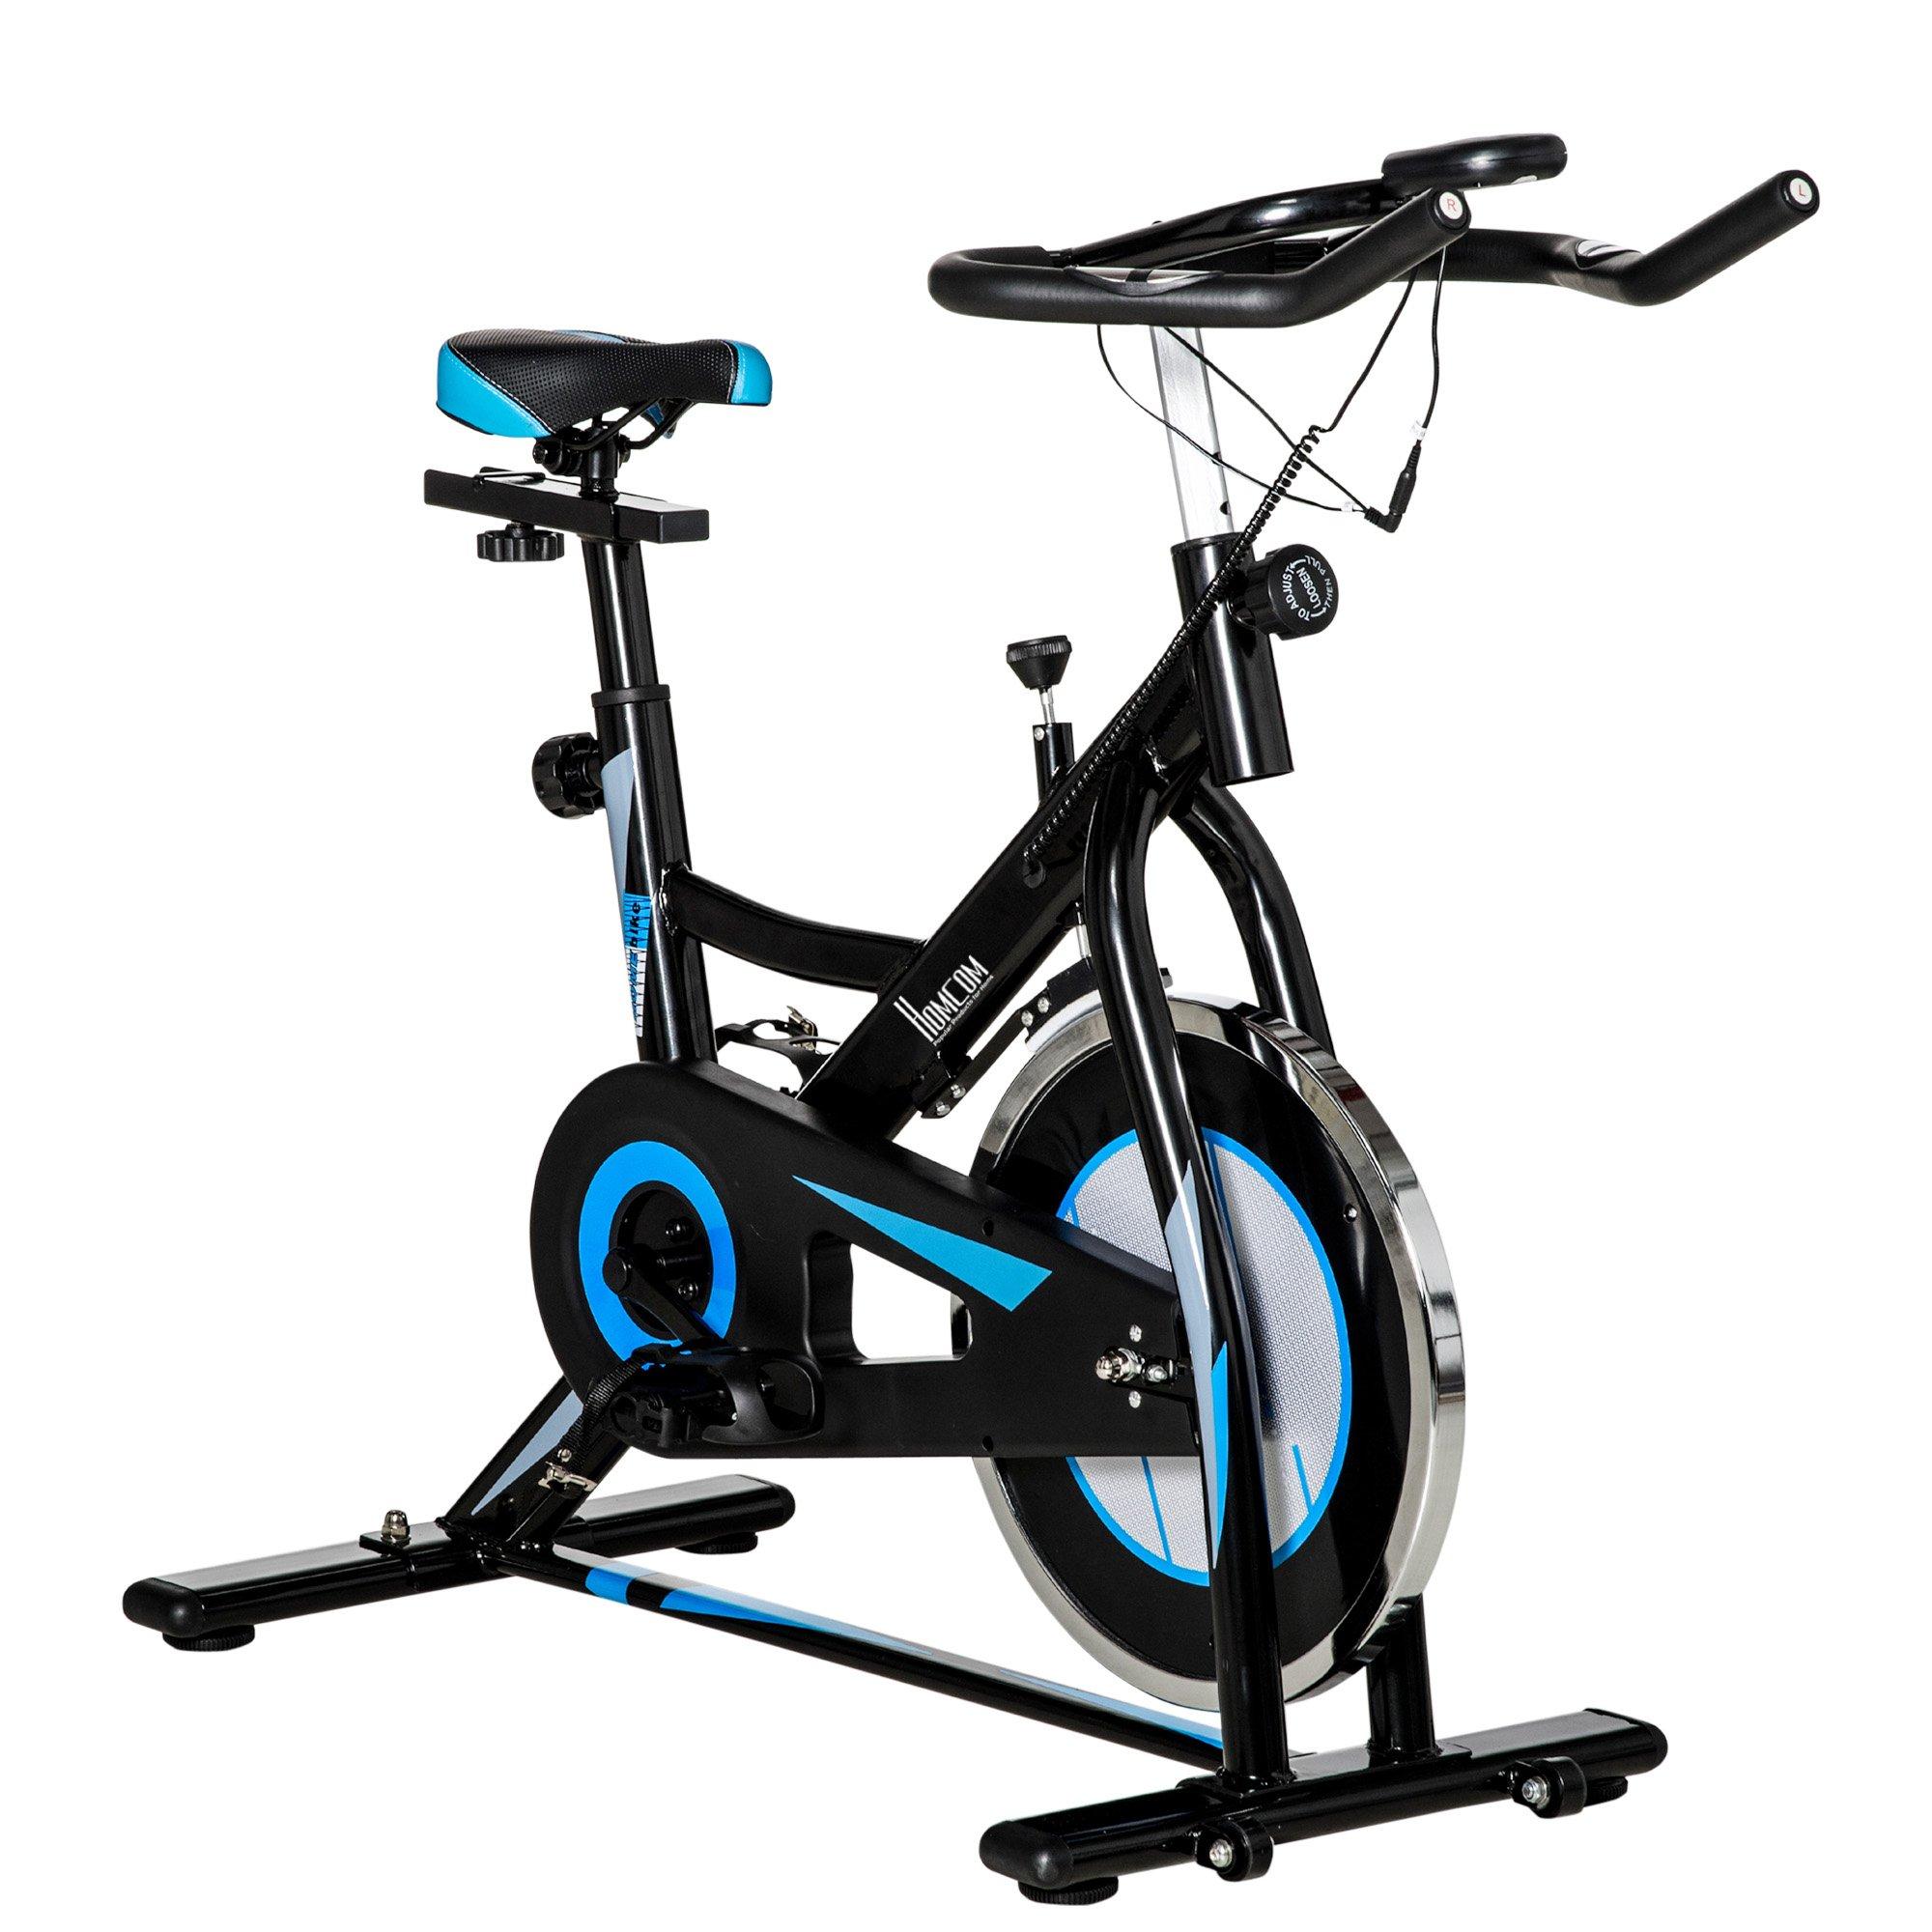 8kg Flywheel Stationary Exercise Bike Indoor Cycling Cardio Bike